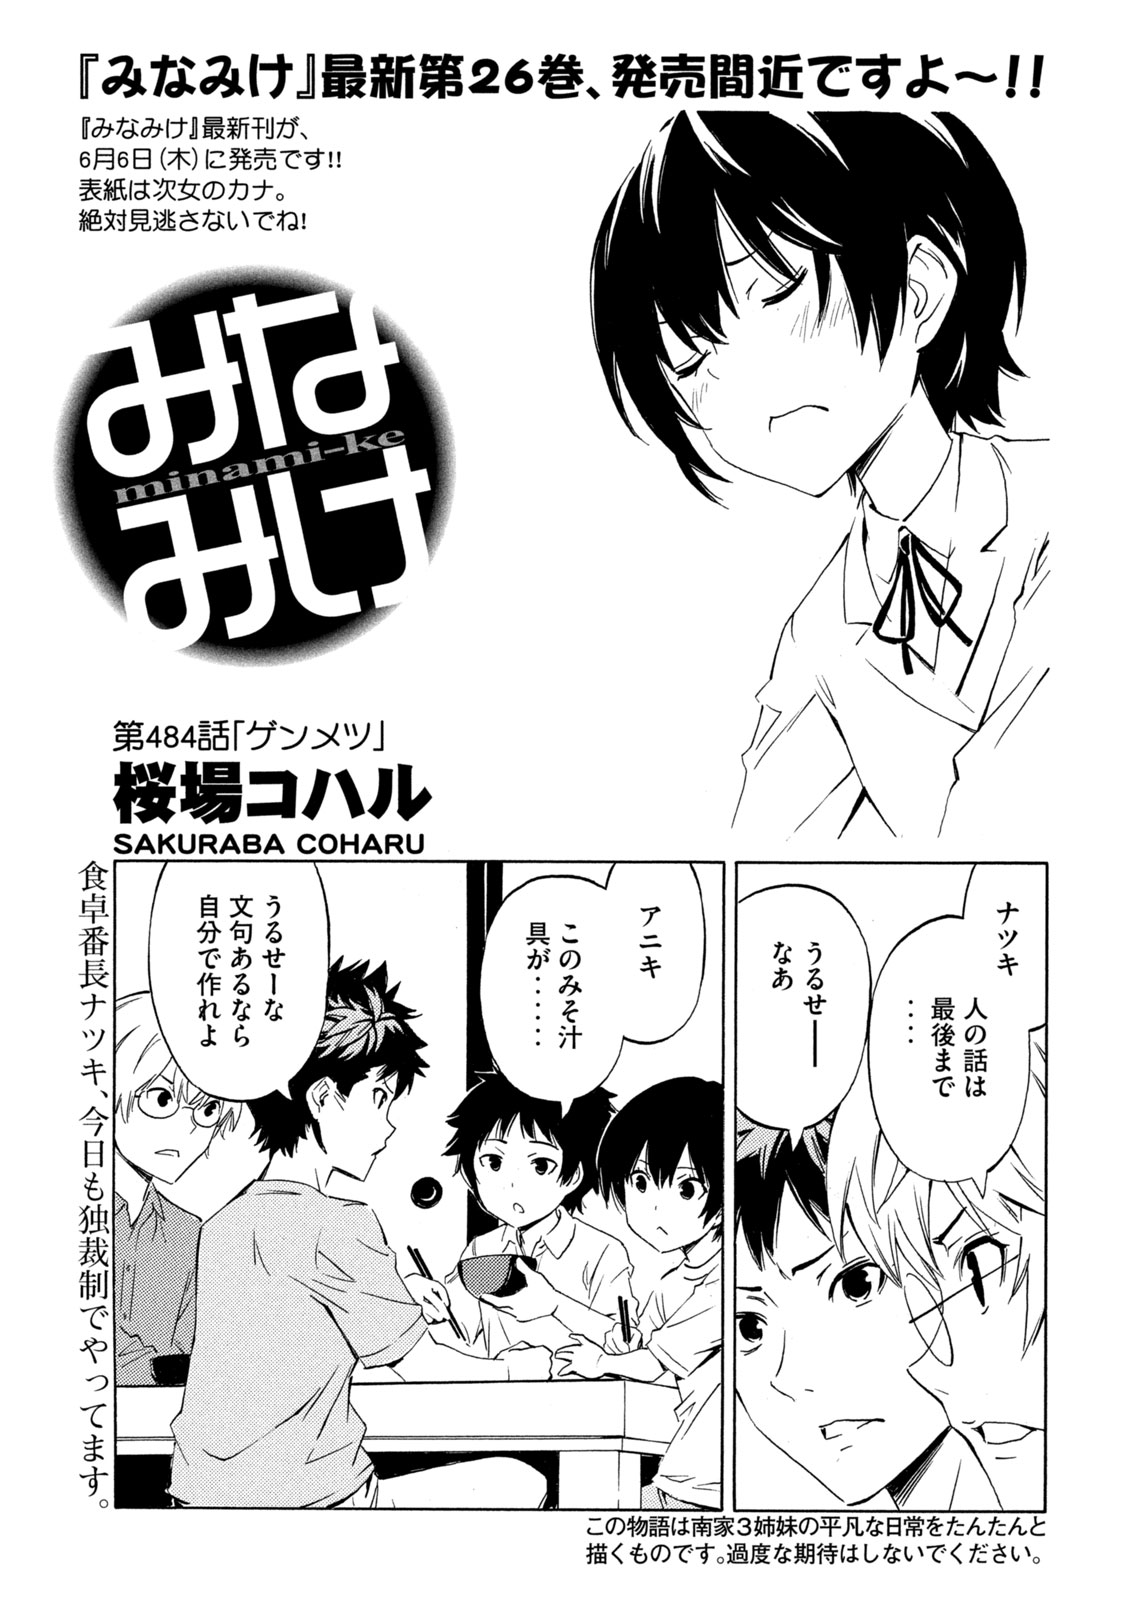 Minami-ke - Chapter 484 - Page 1